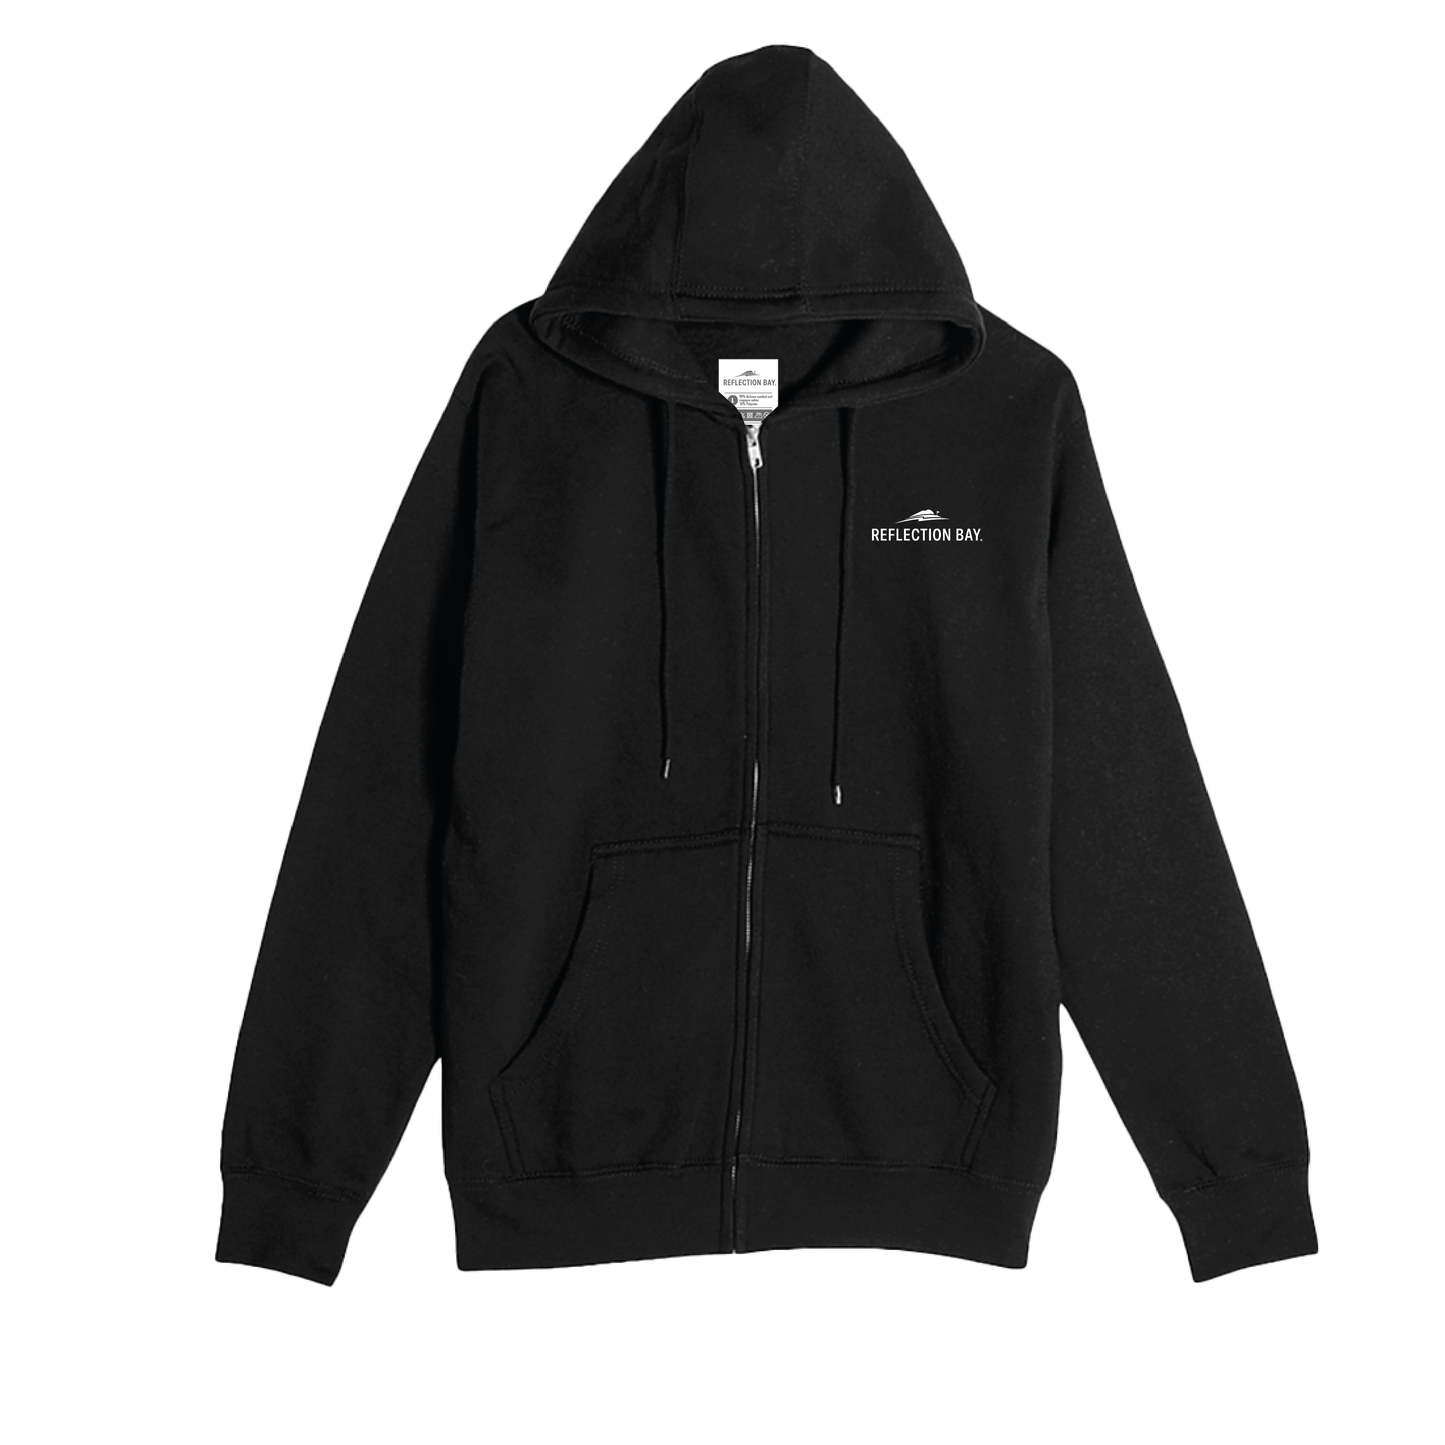 Reflection Bay Premium Unisex Hooded Zip Sweatshirt